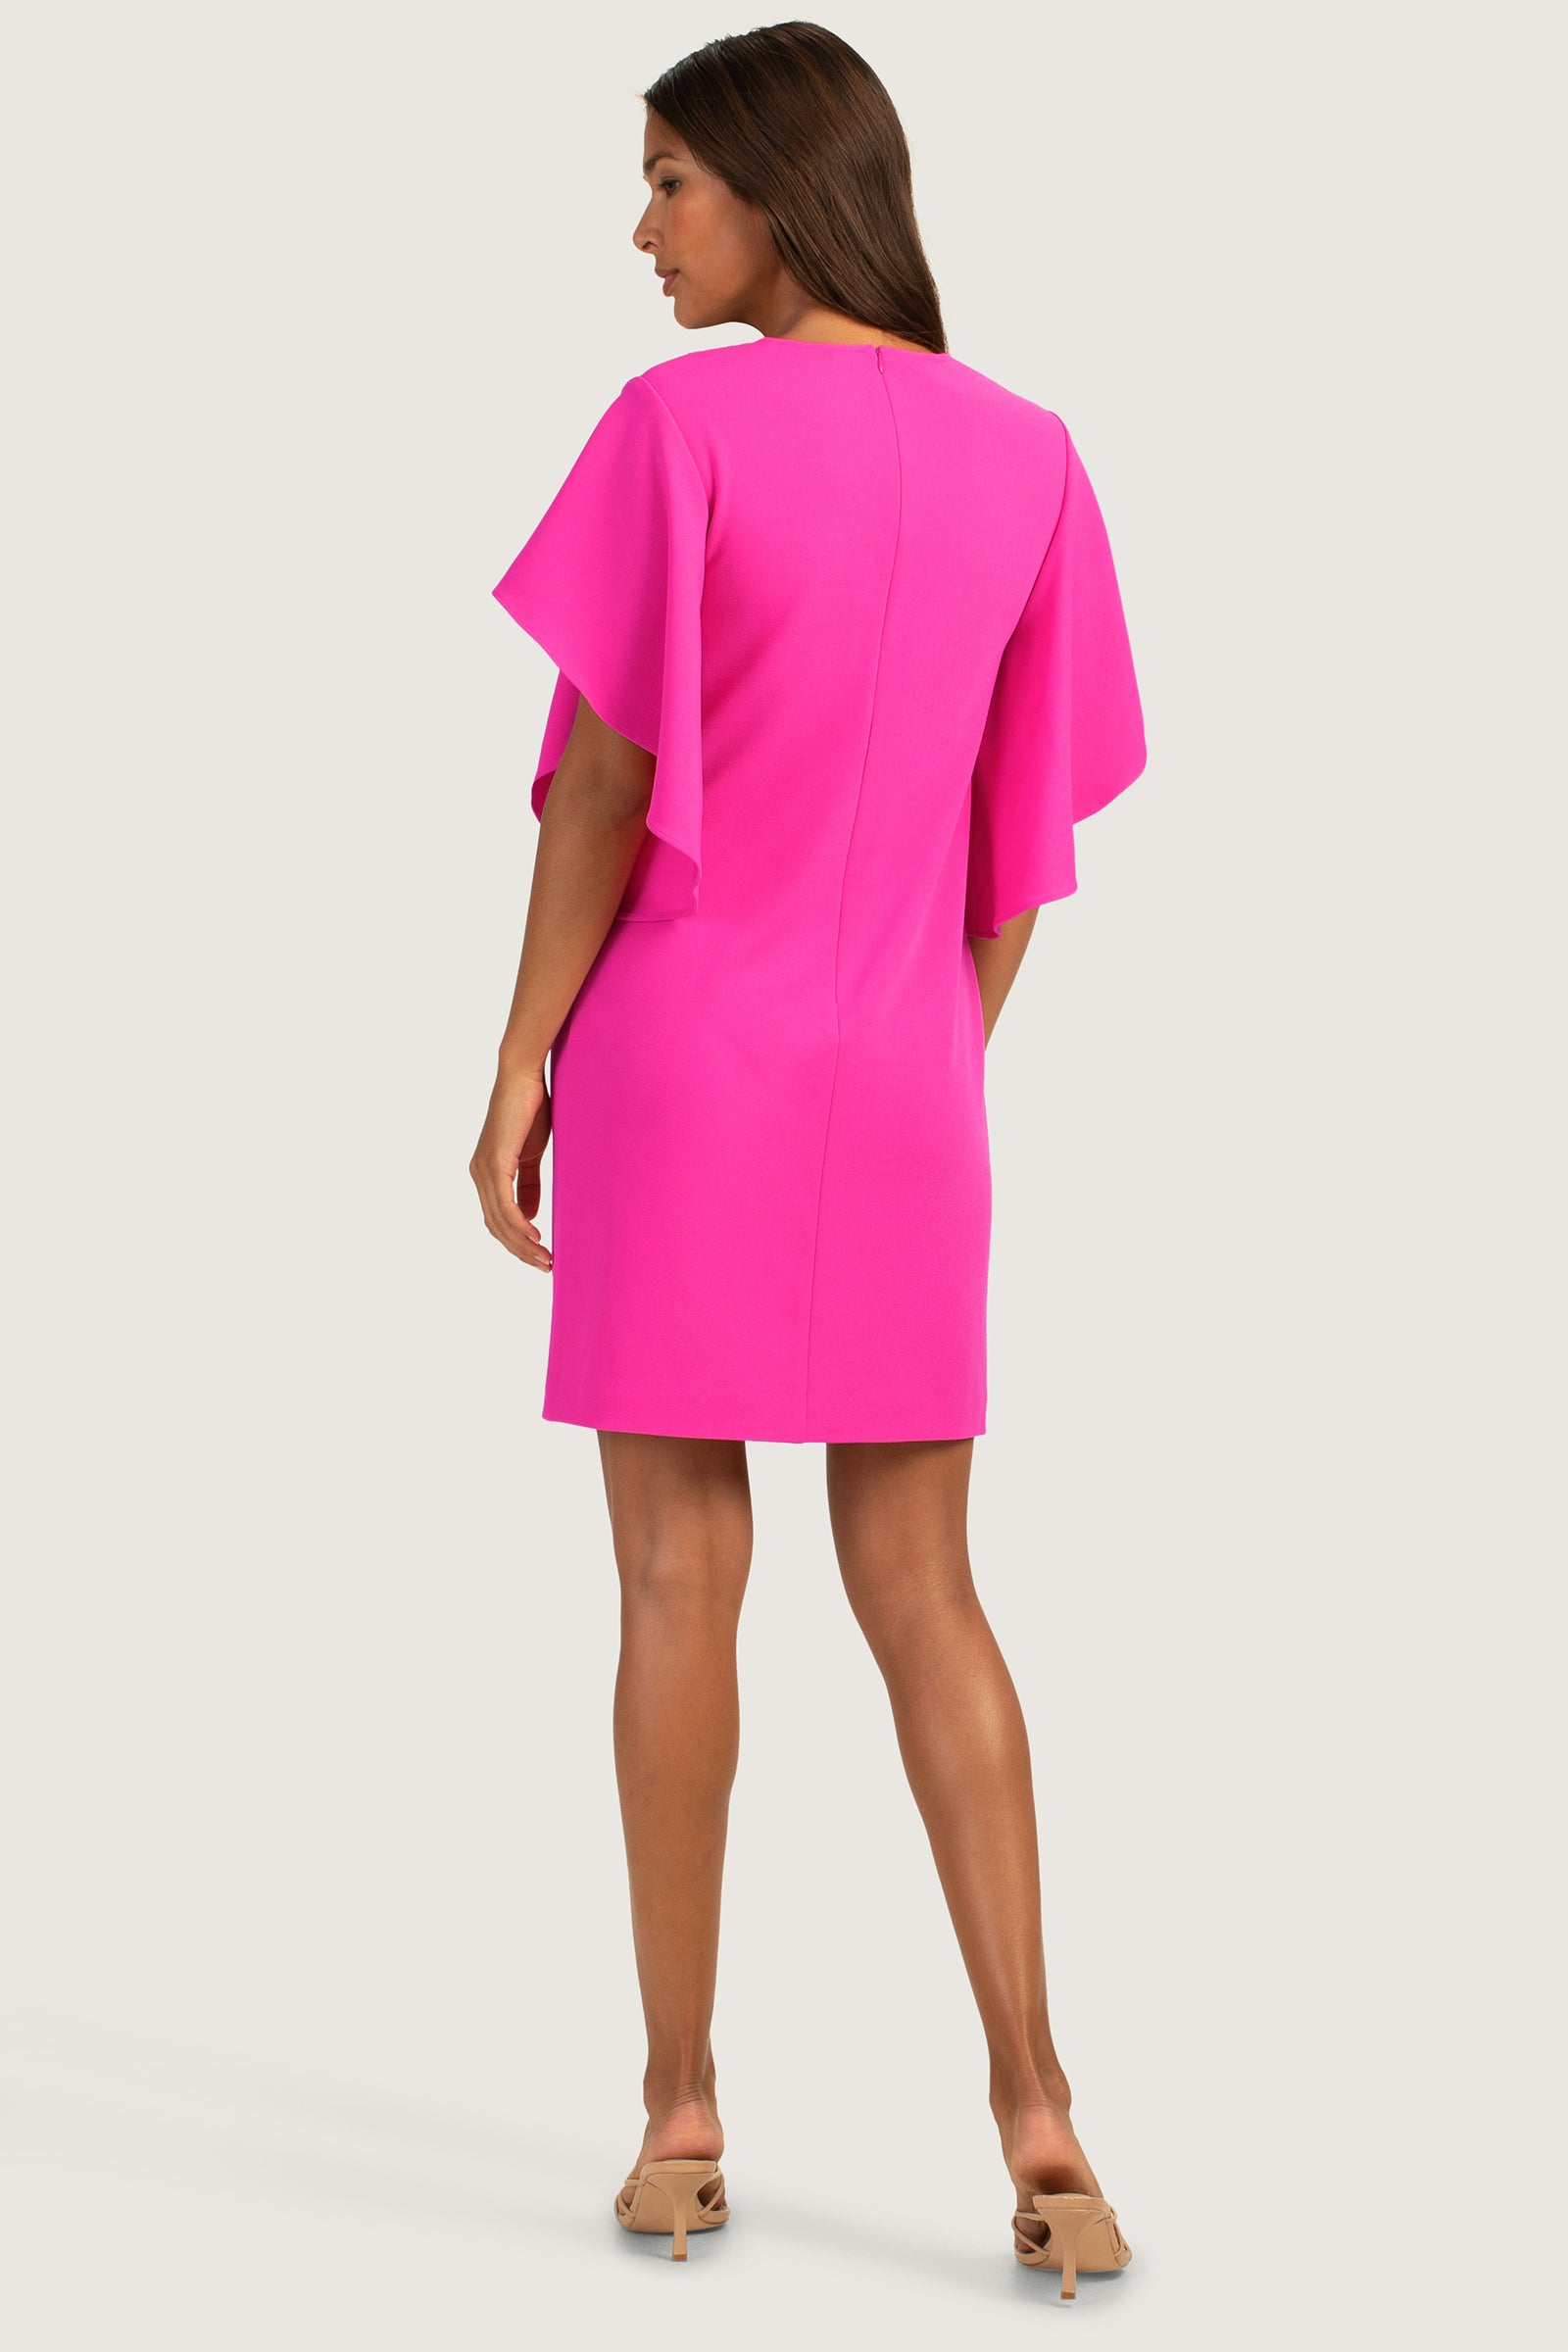 Moore Dress - Trina Pink